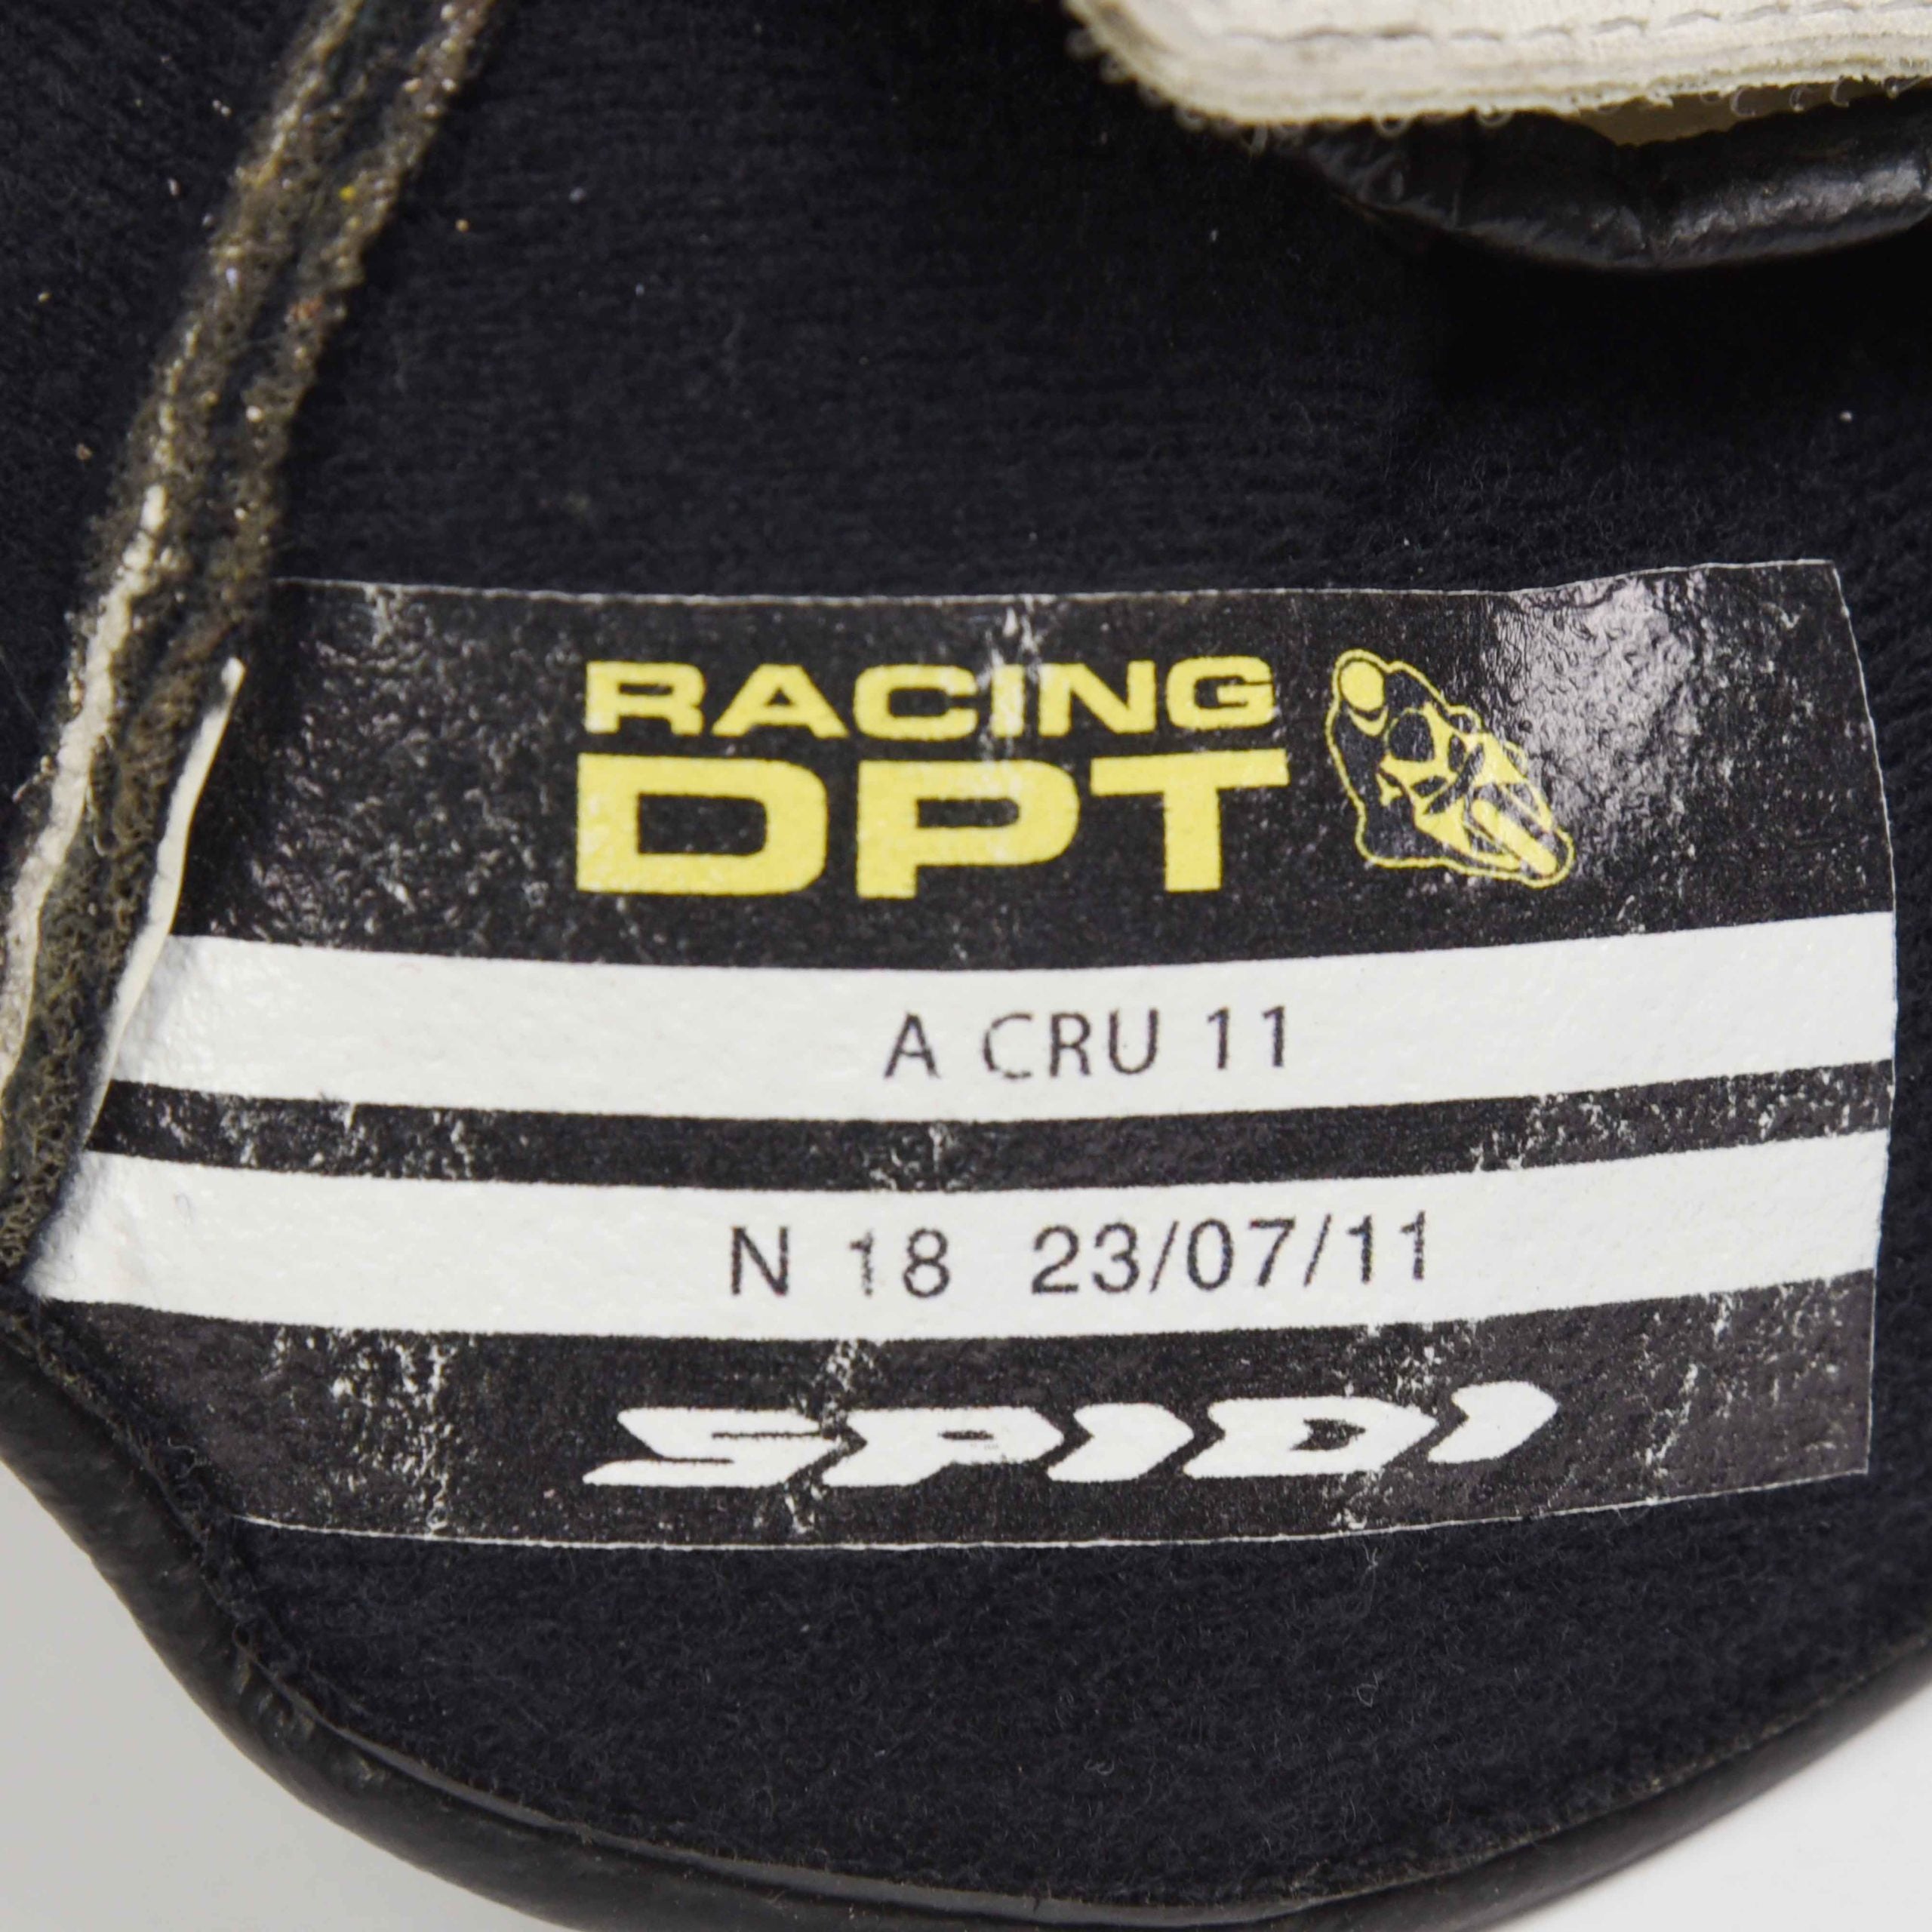 2011 Cal Crutchlow Signed Race Used Yamaha Tech 3 MotoGP Gloves